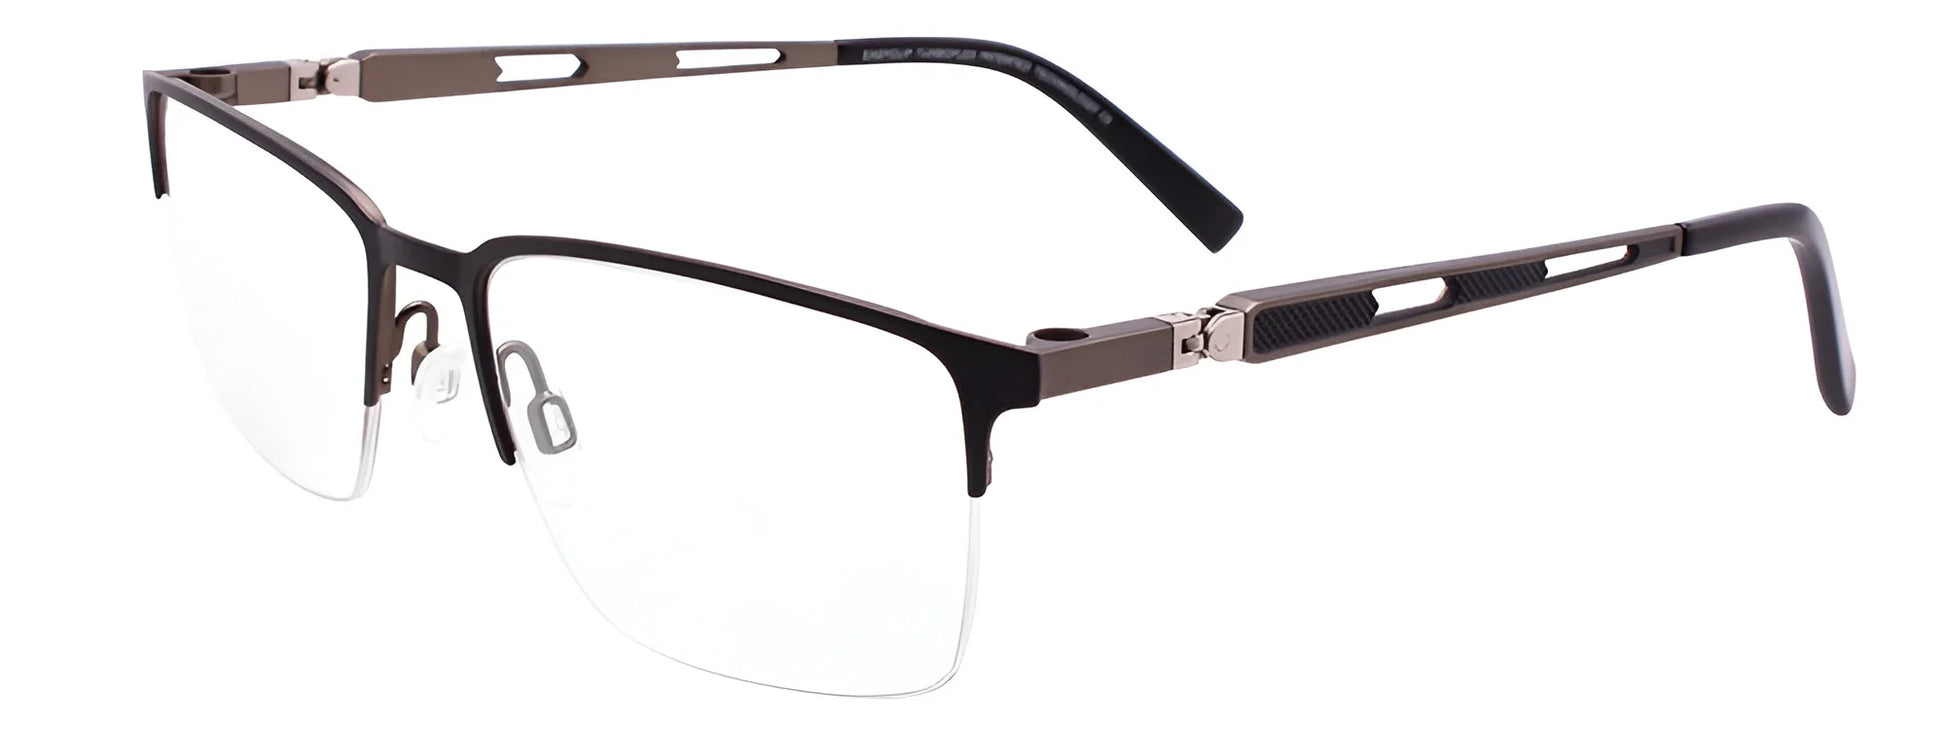 EasyClip EC459 Eyeglasses with Clip-on Sunglasses Matt Black & Steel Green